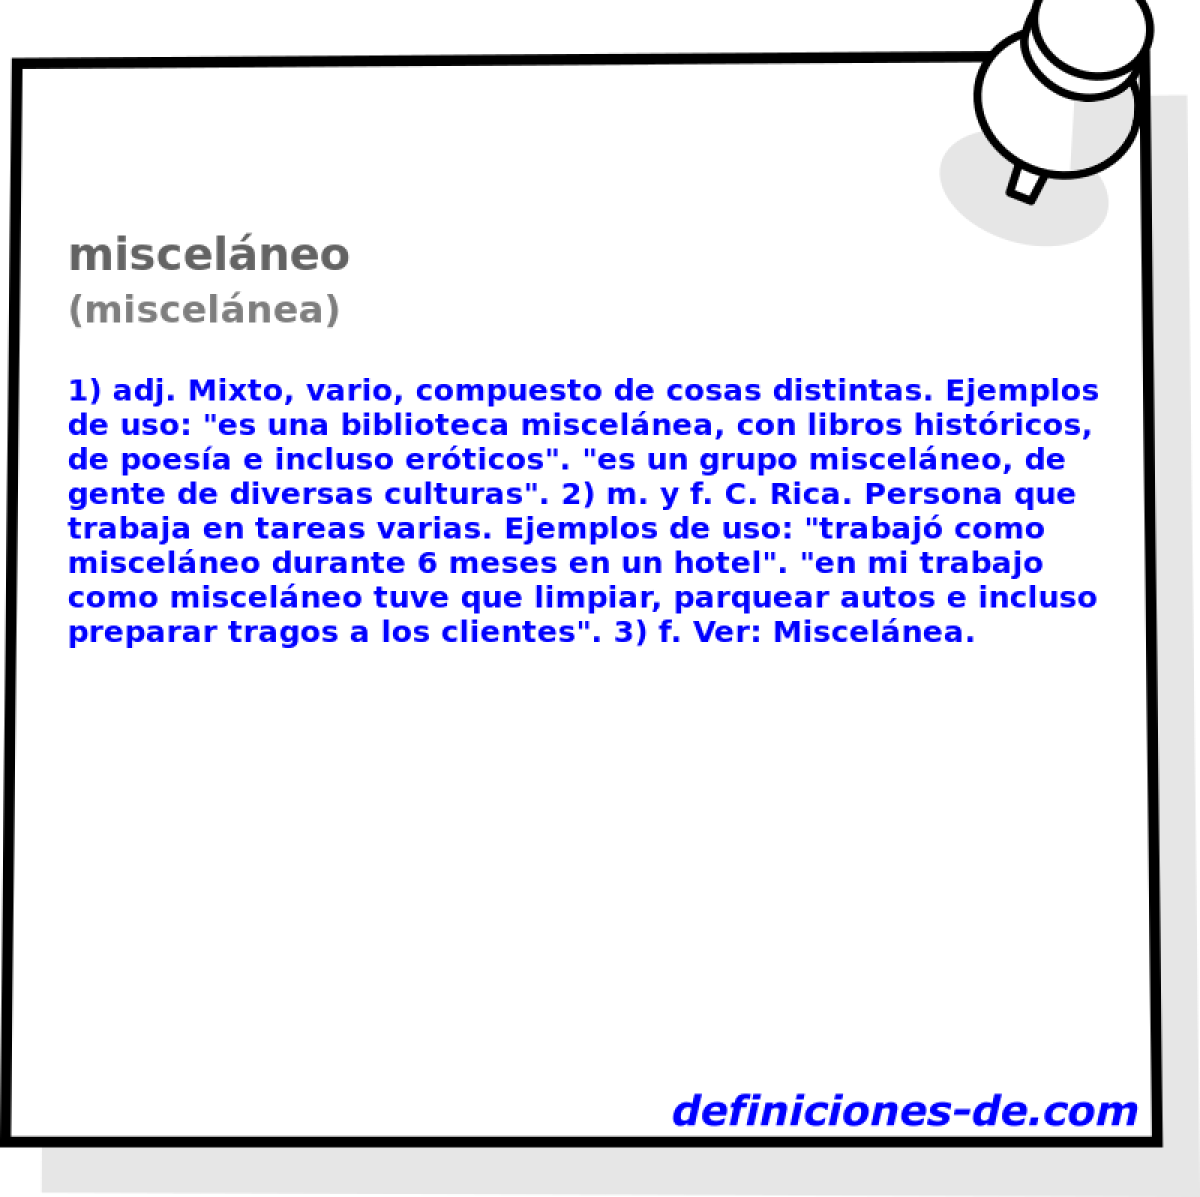 miscelneo (miscelnea)